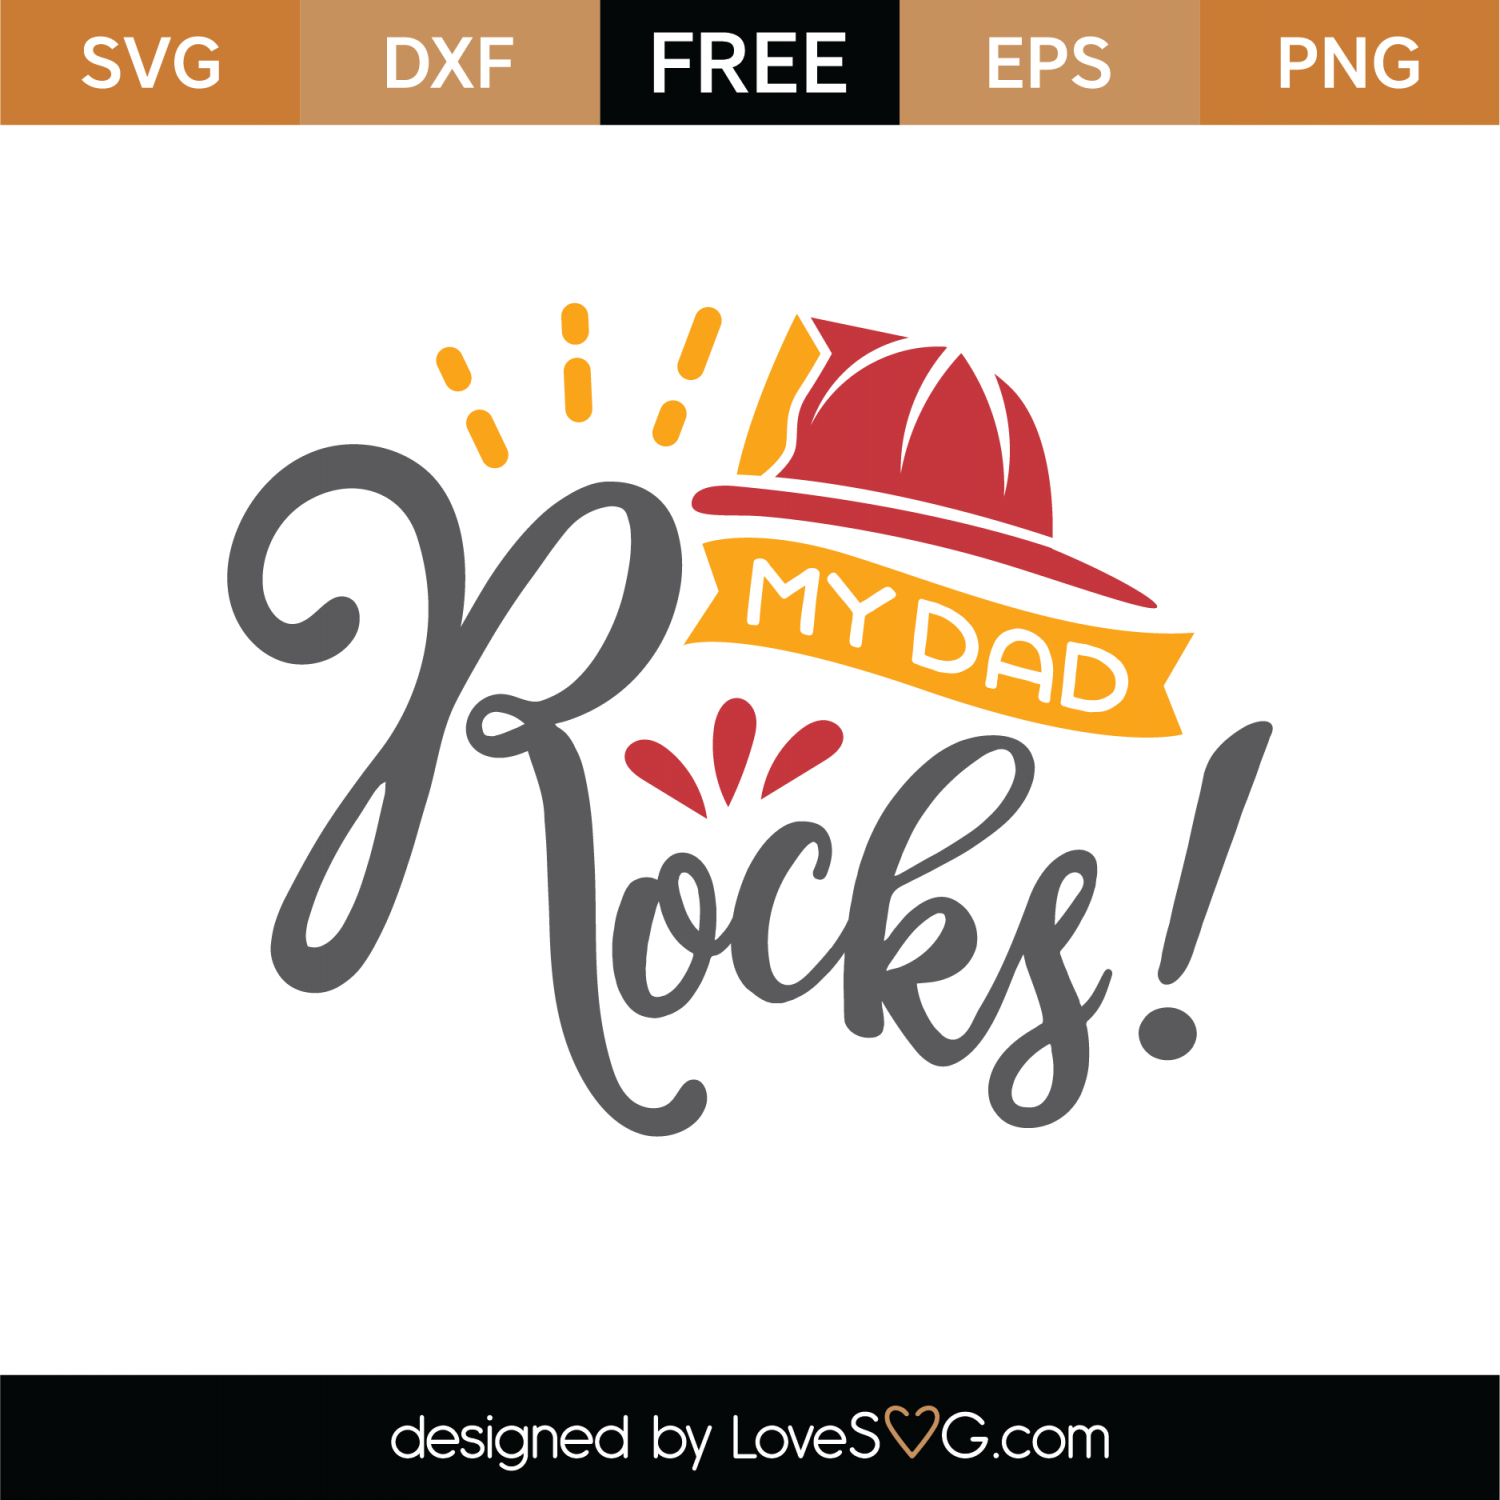 Download Free My Dad Rocks SVG Cut File | Lovesvg.com